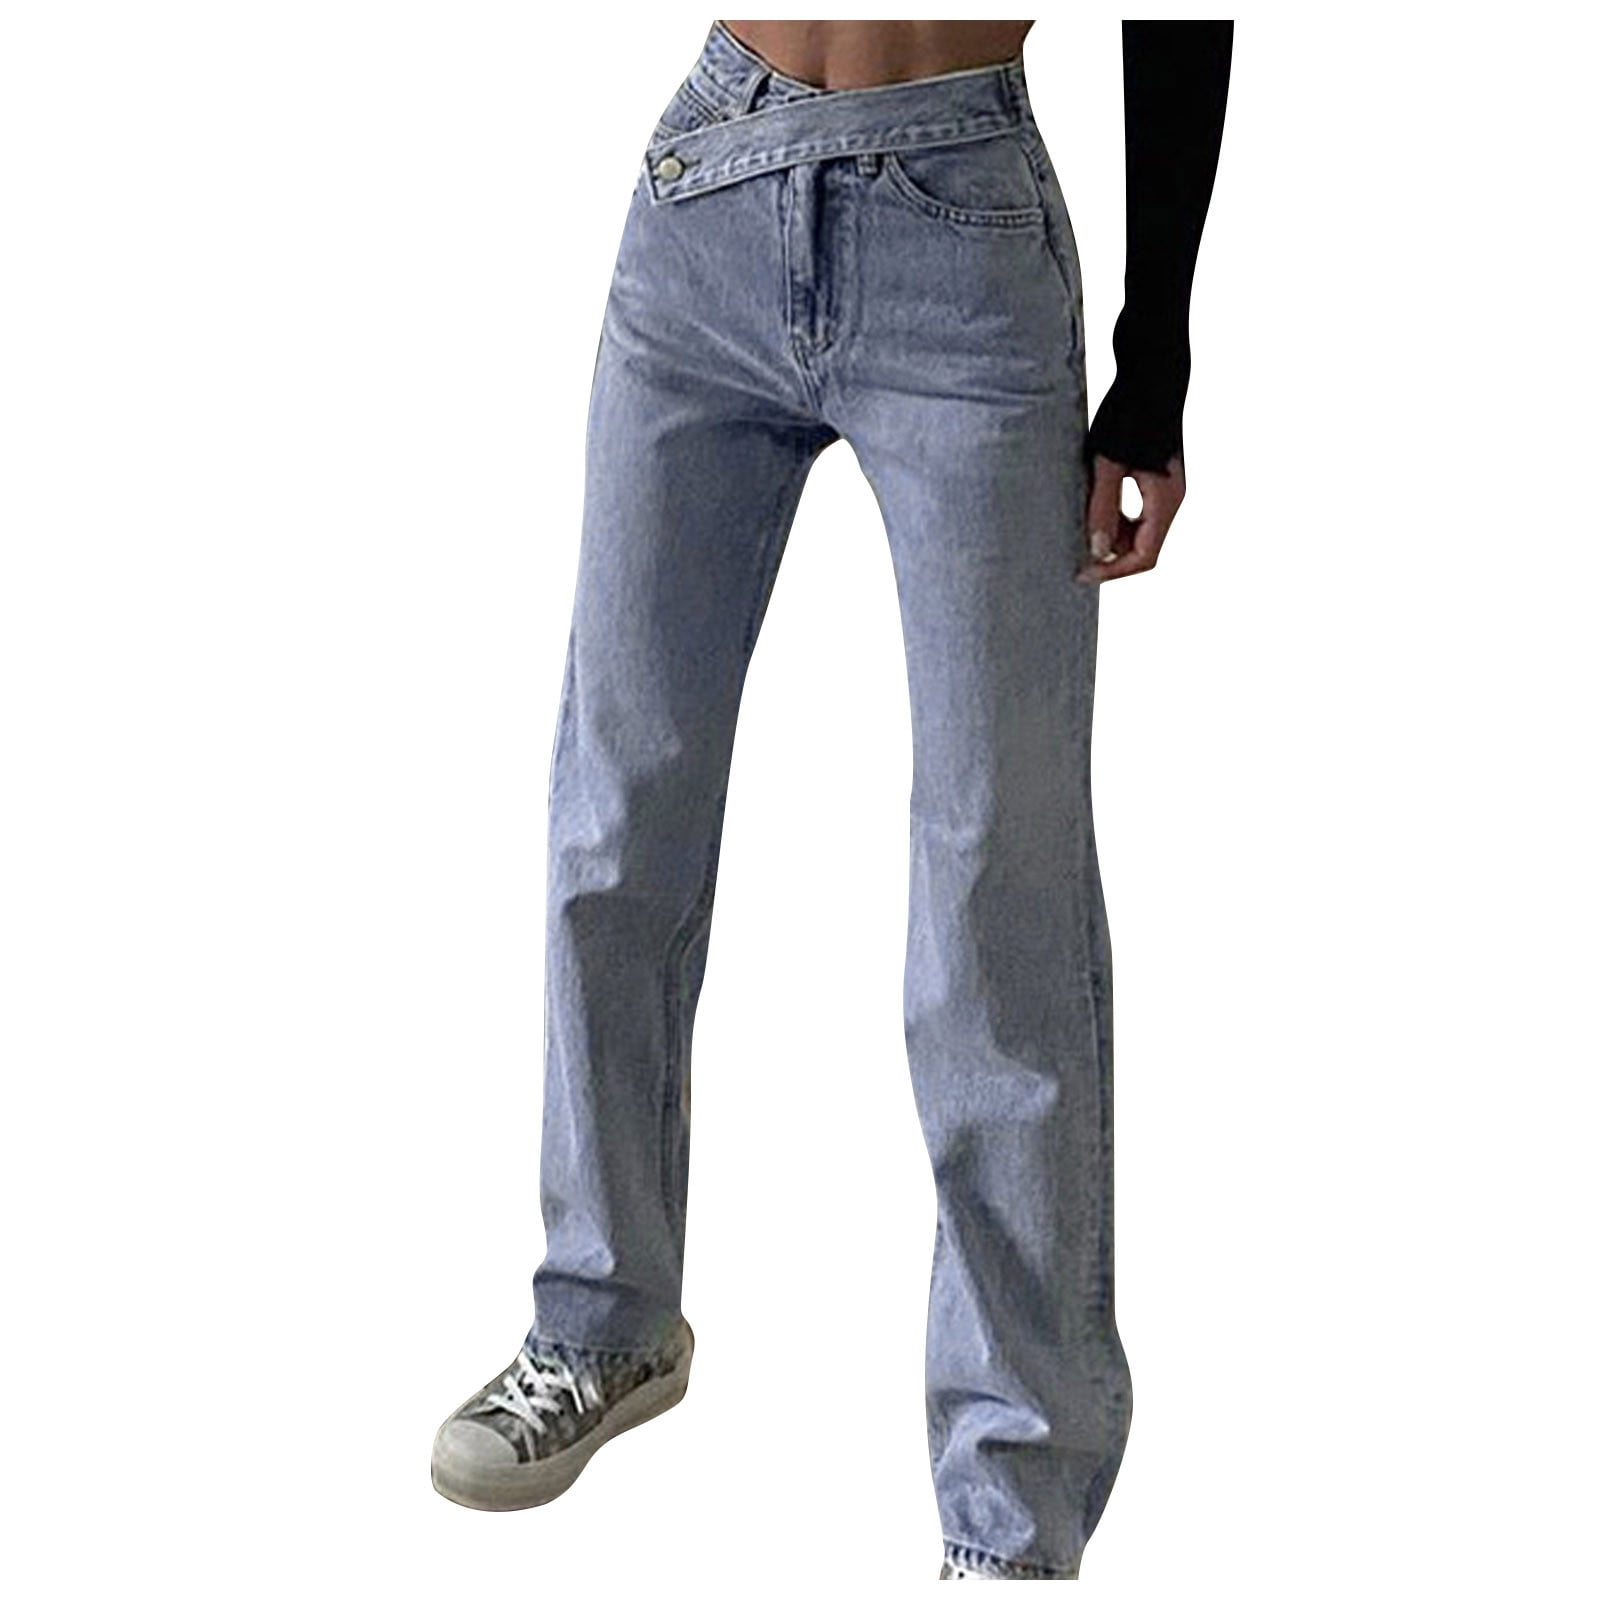 Kids Girls Side Stripped  Skinny Jeans Denim Fashion Stretchy Pants 3-14 Years 